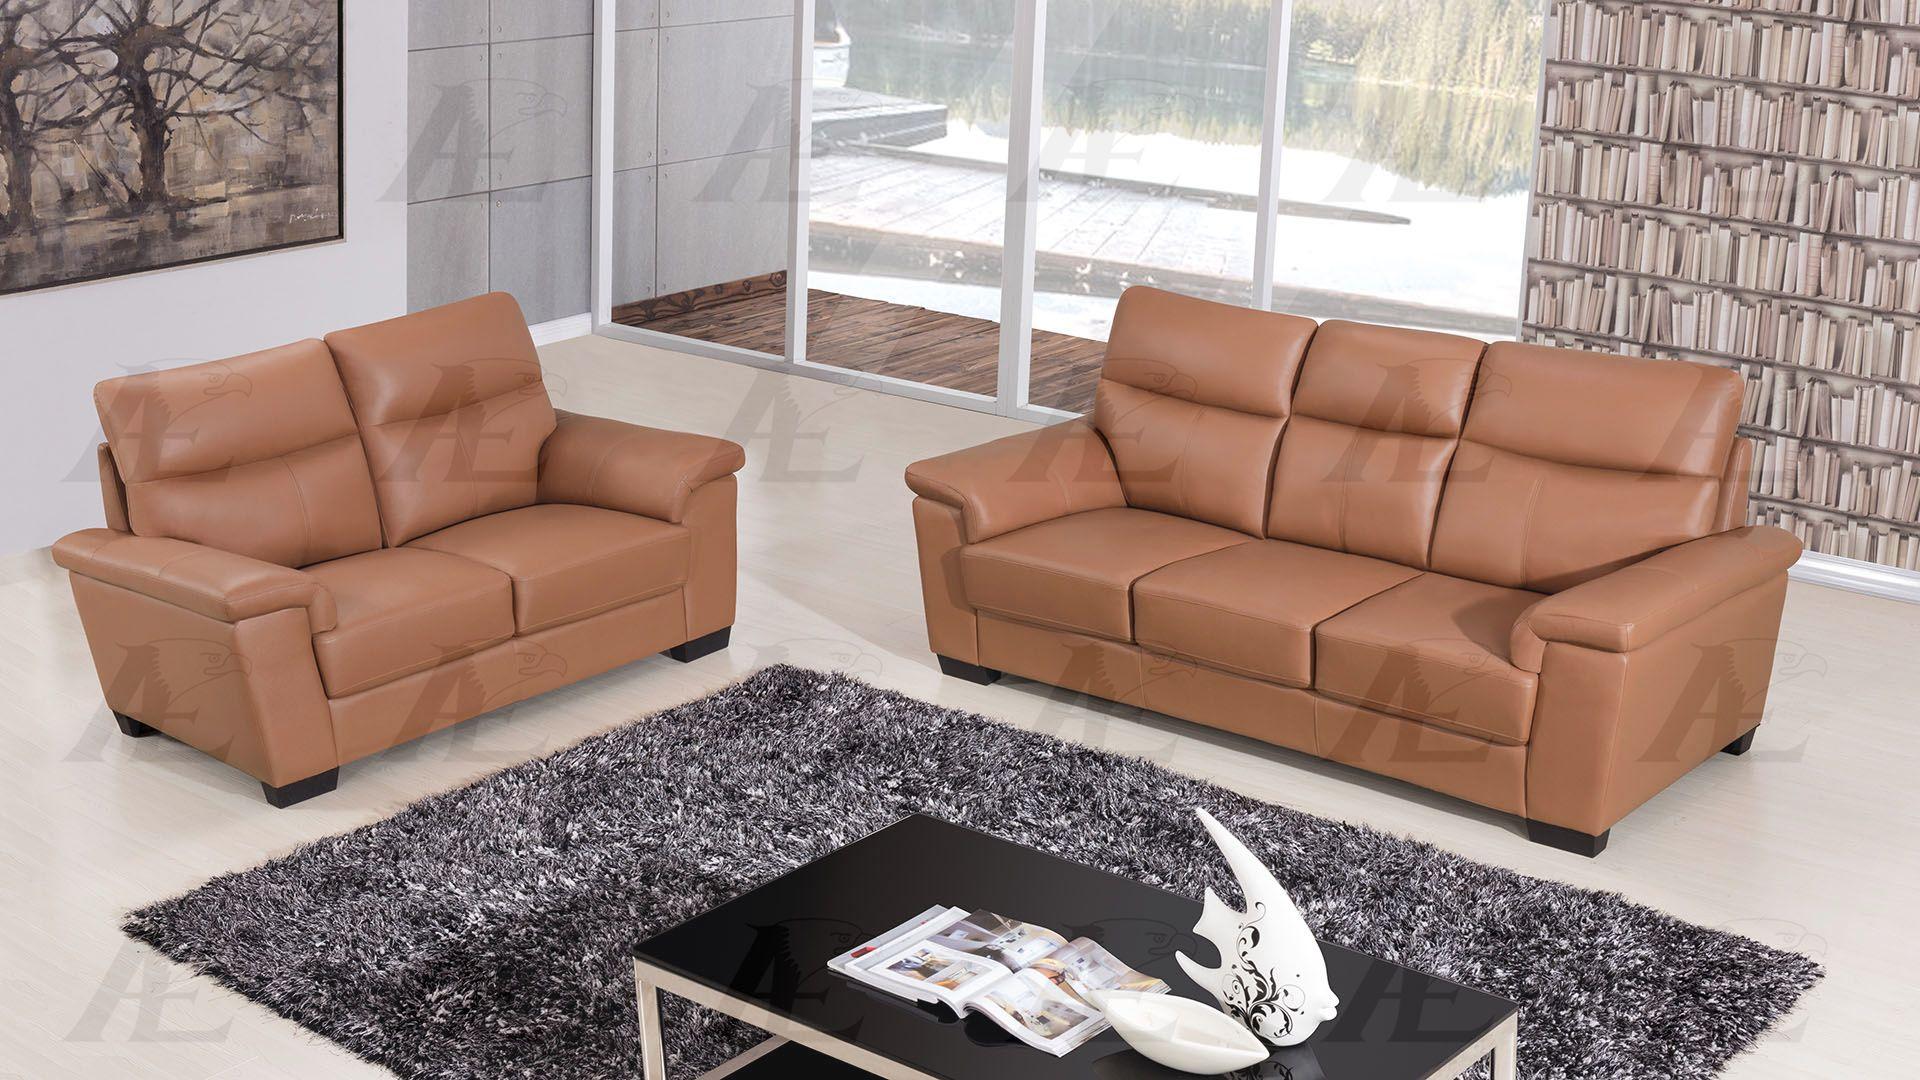 

    
American Eagle EK515 Dark Tan Genuine Leather Living Room 2pcs Sofa Set in Contemporary Style
